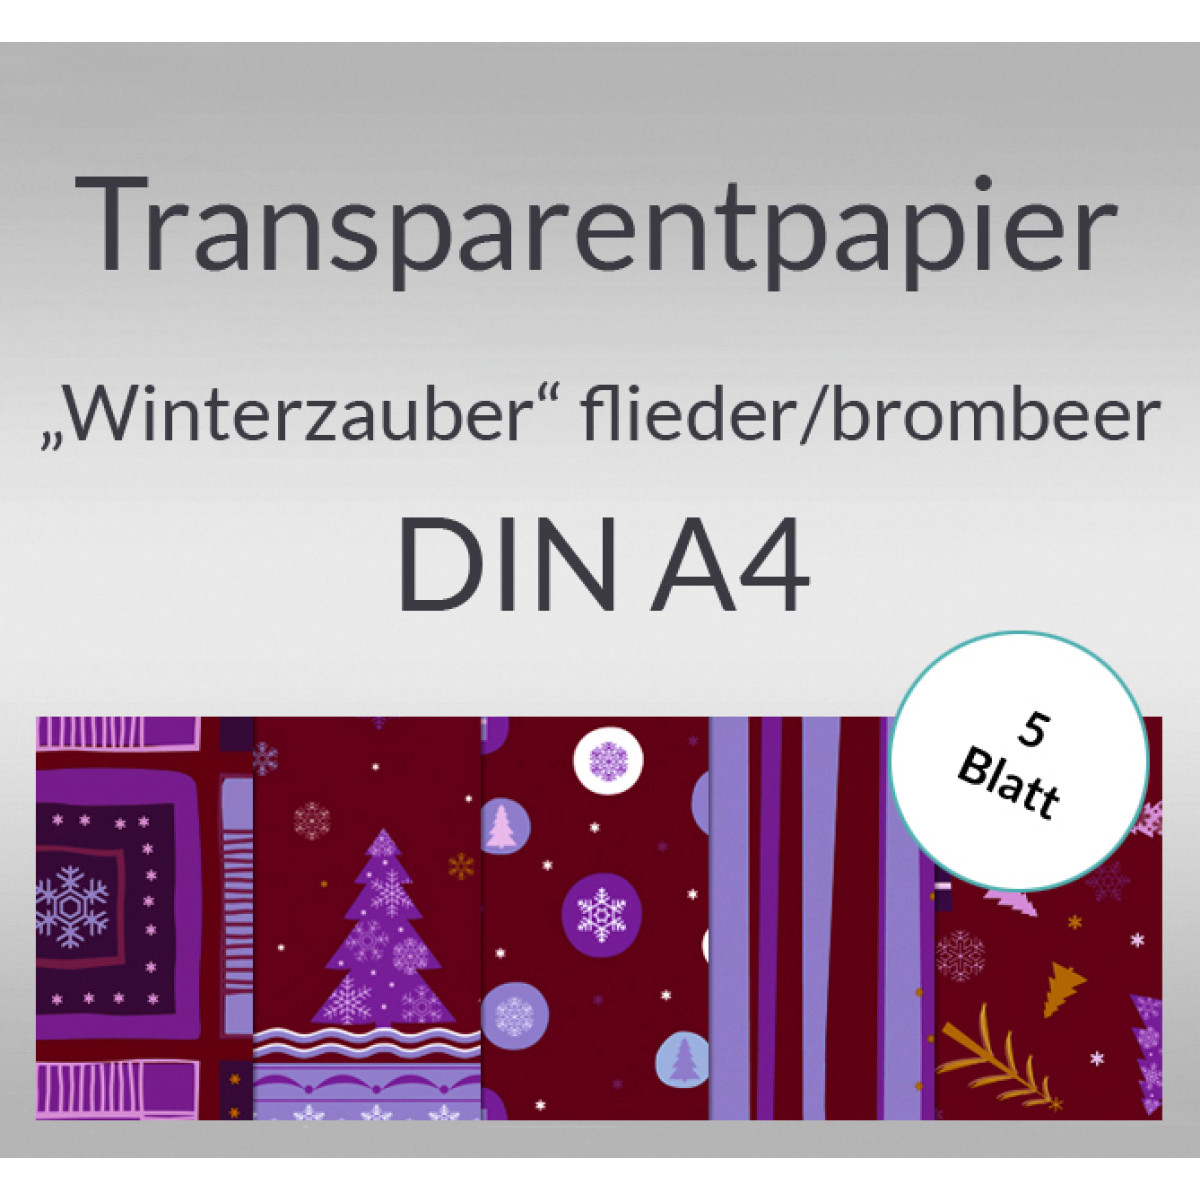 Transparentpapier "Winterzauber" flieder/brombeer DIN A4 - 5 Blatt